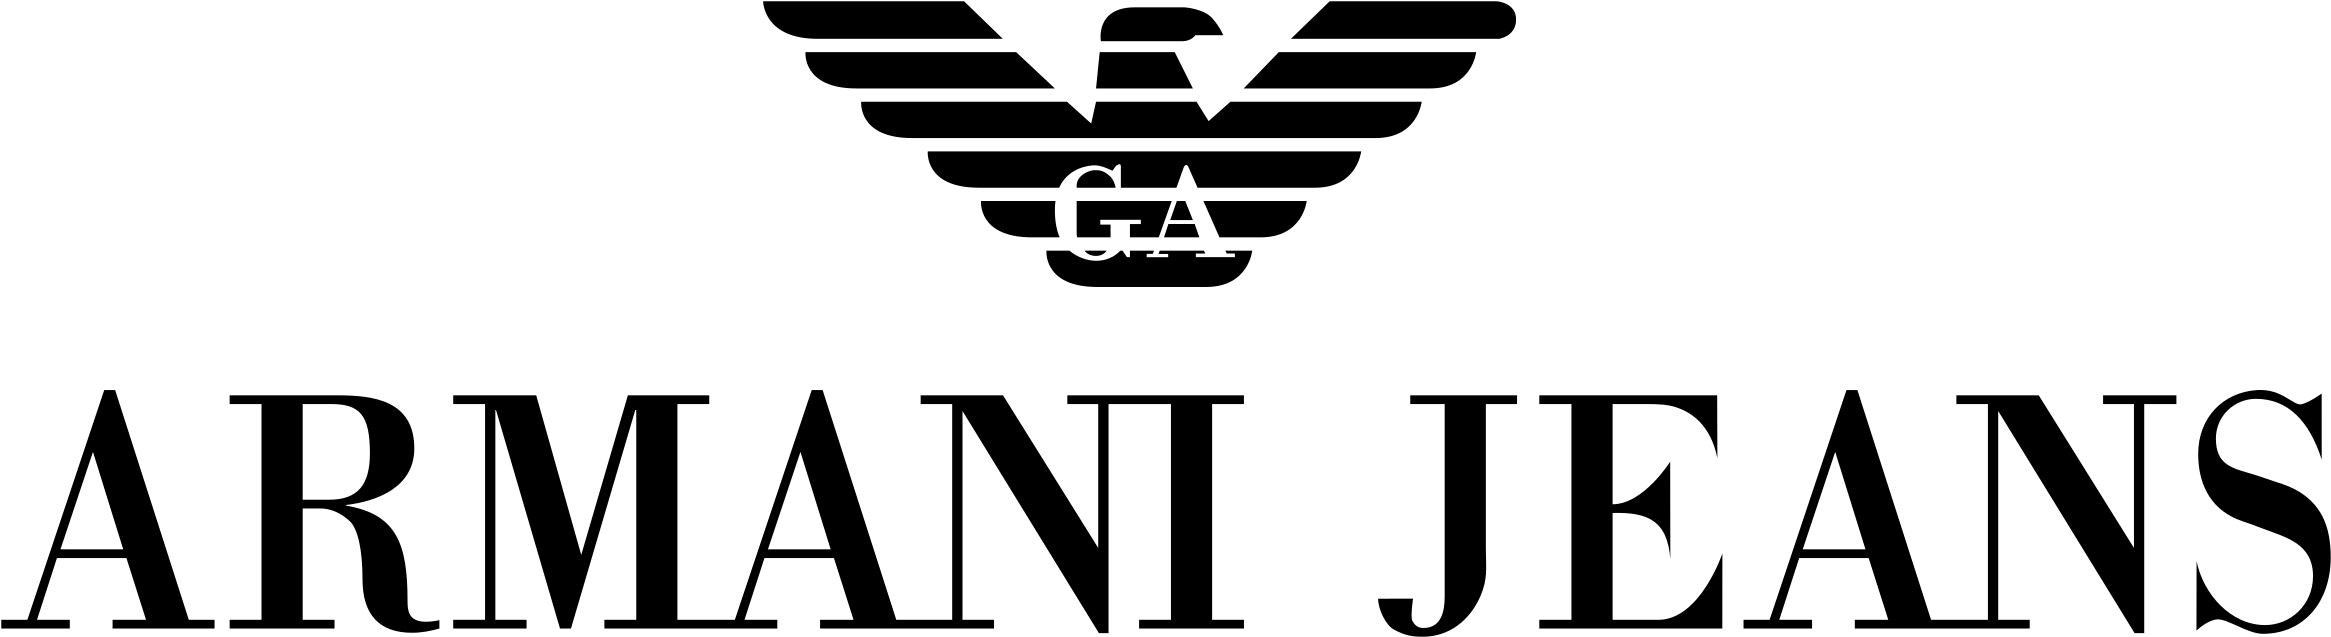 Armani Logo PNG HD Quality